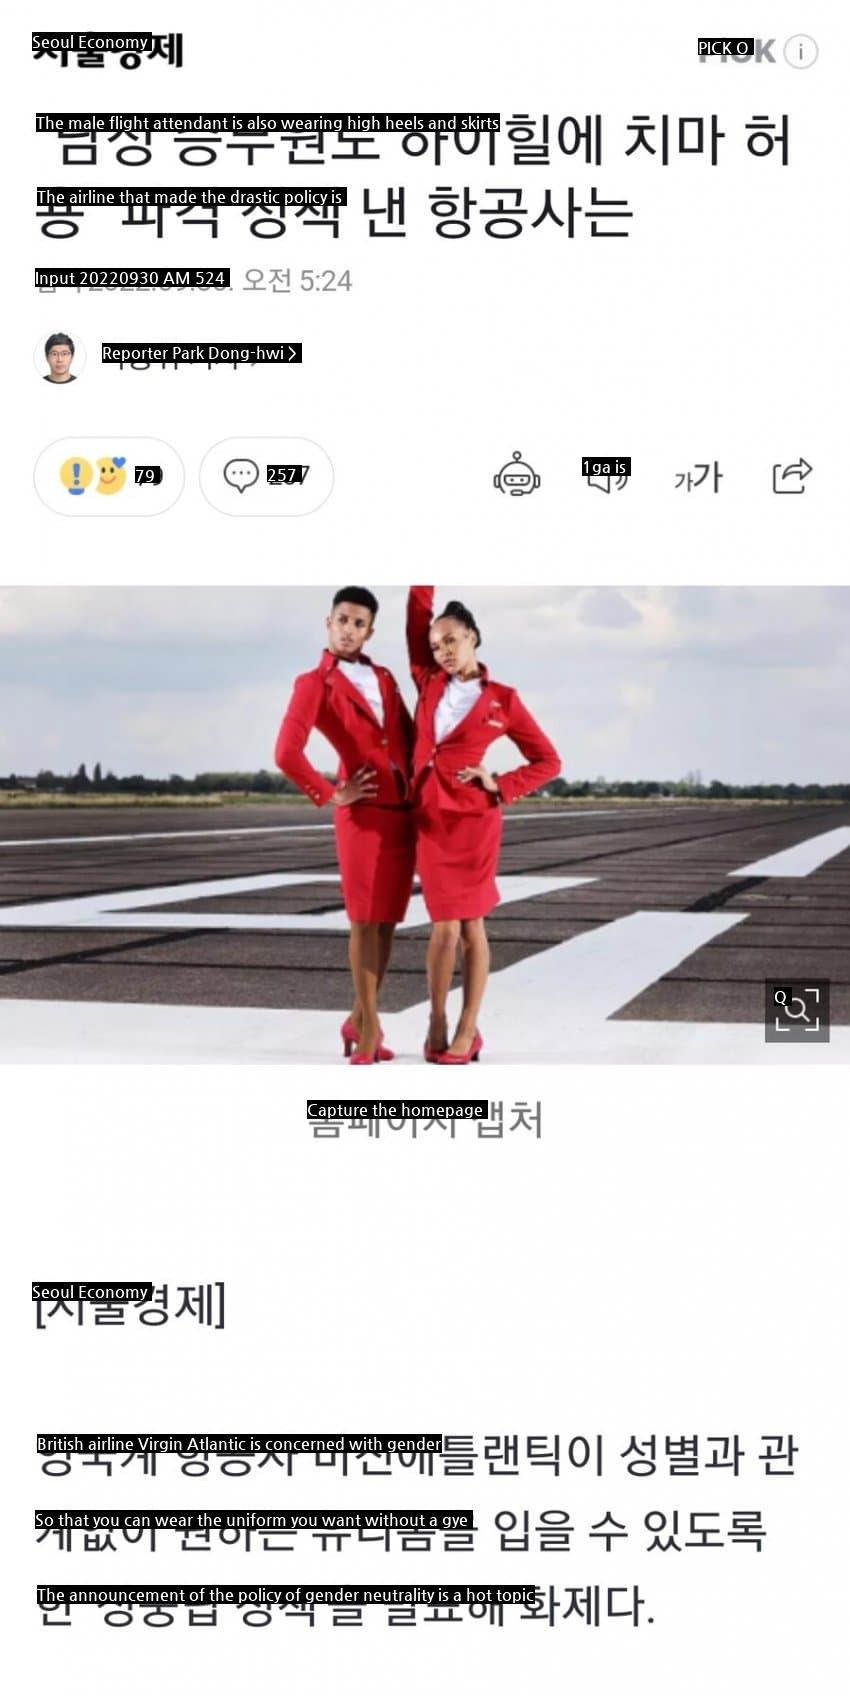 Male flight attendants are allowed to wear skirts on high heels